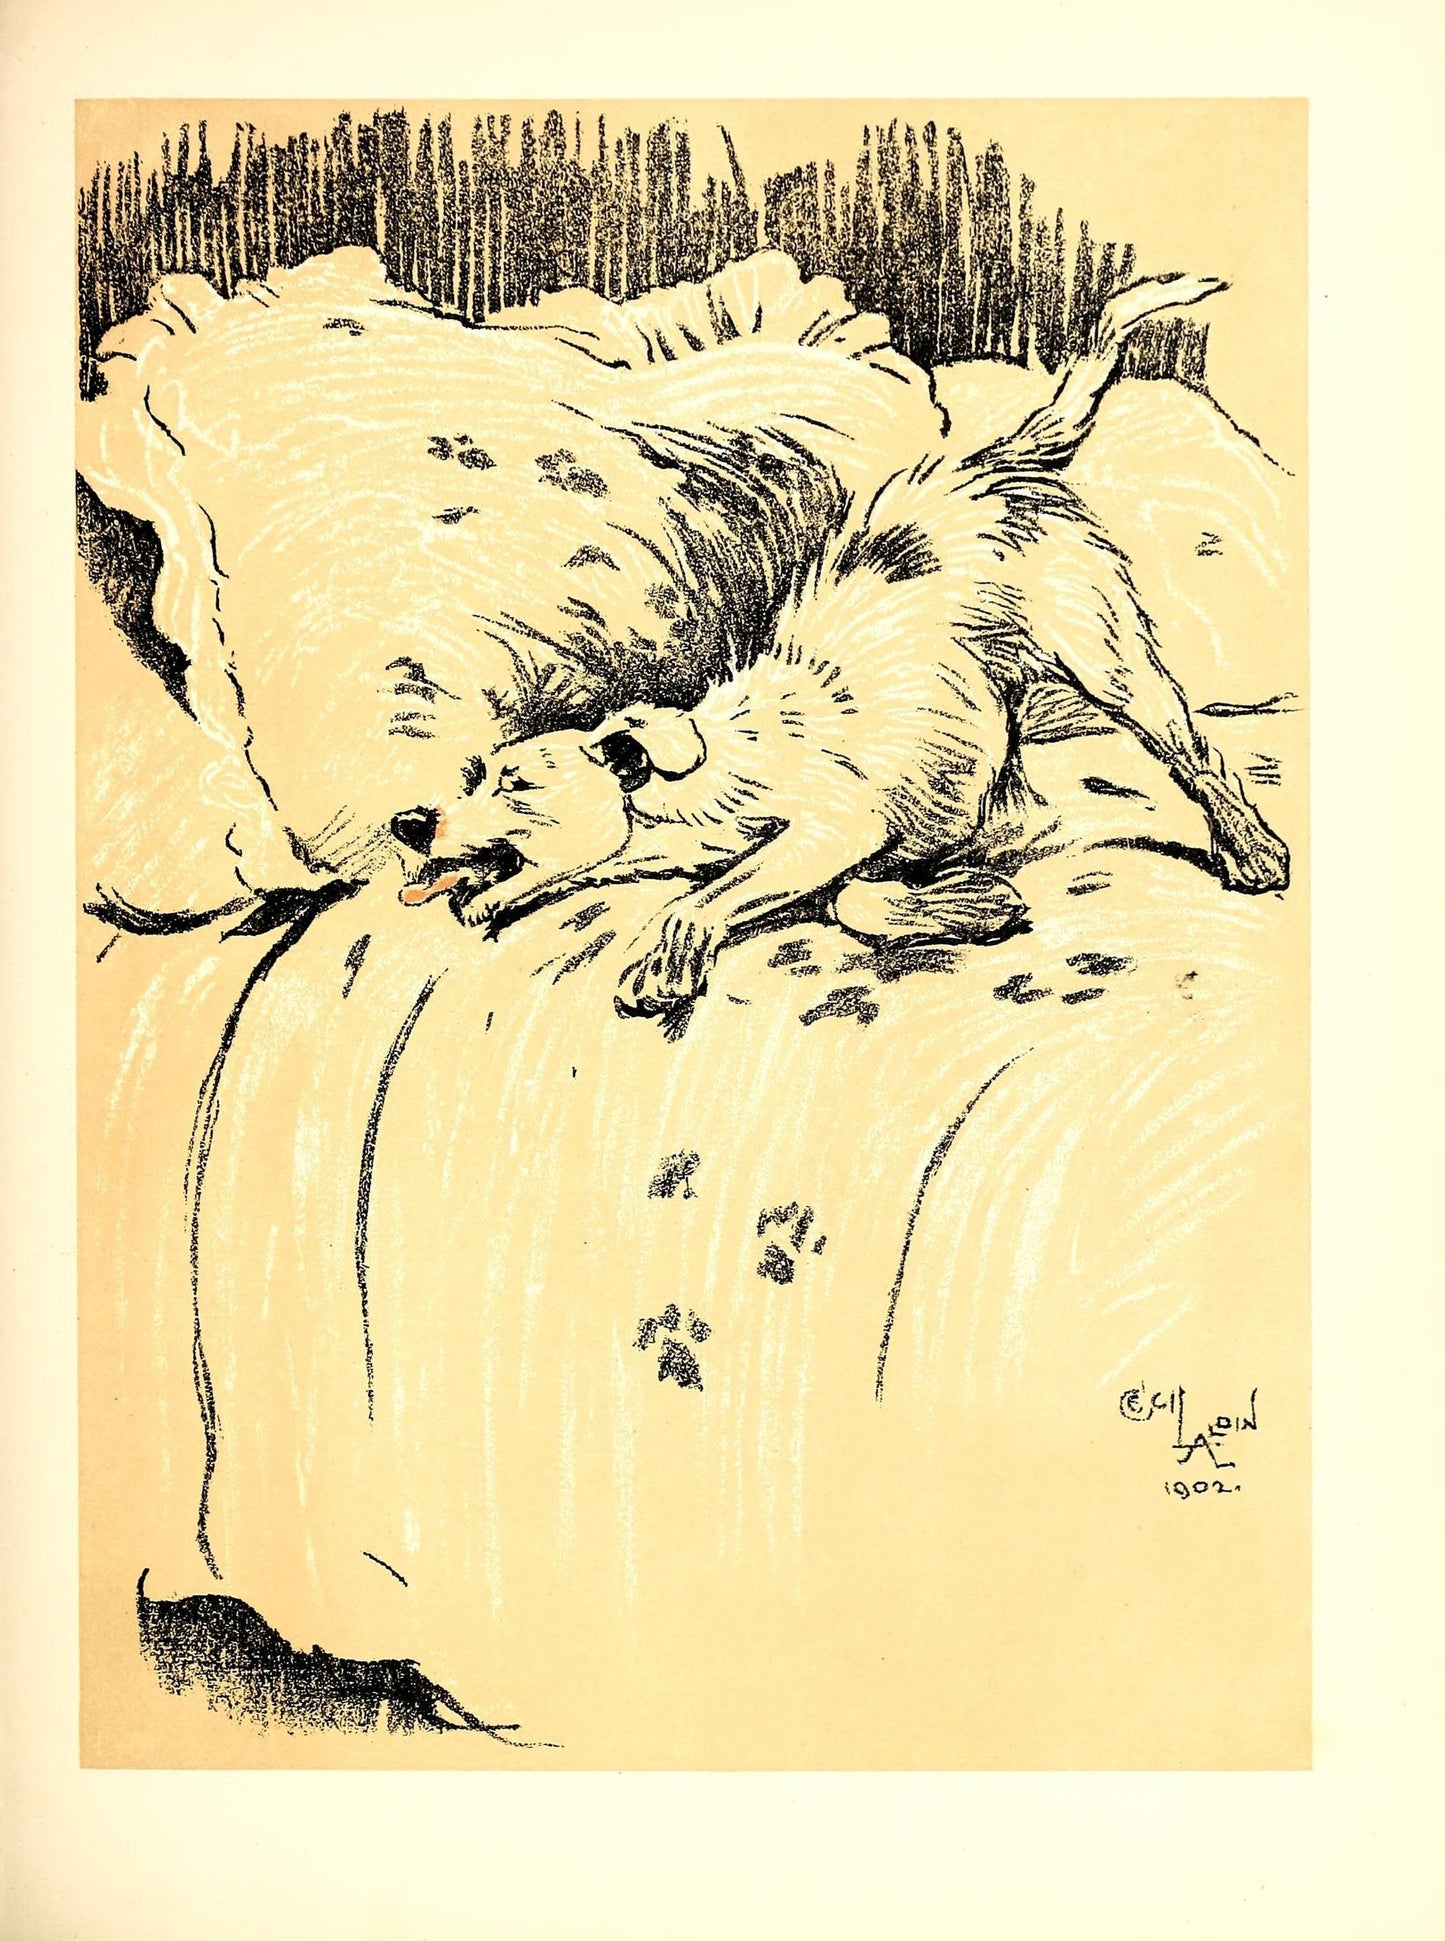 Muddy paws dog (1902) | Animal wall art prints | Cecil Aldin Posters, Prints, & Visual Artwork The Trumpet Shop   